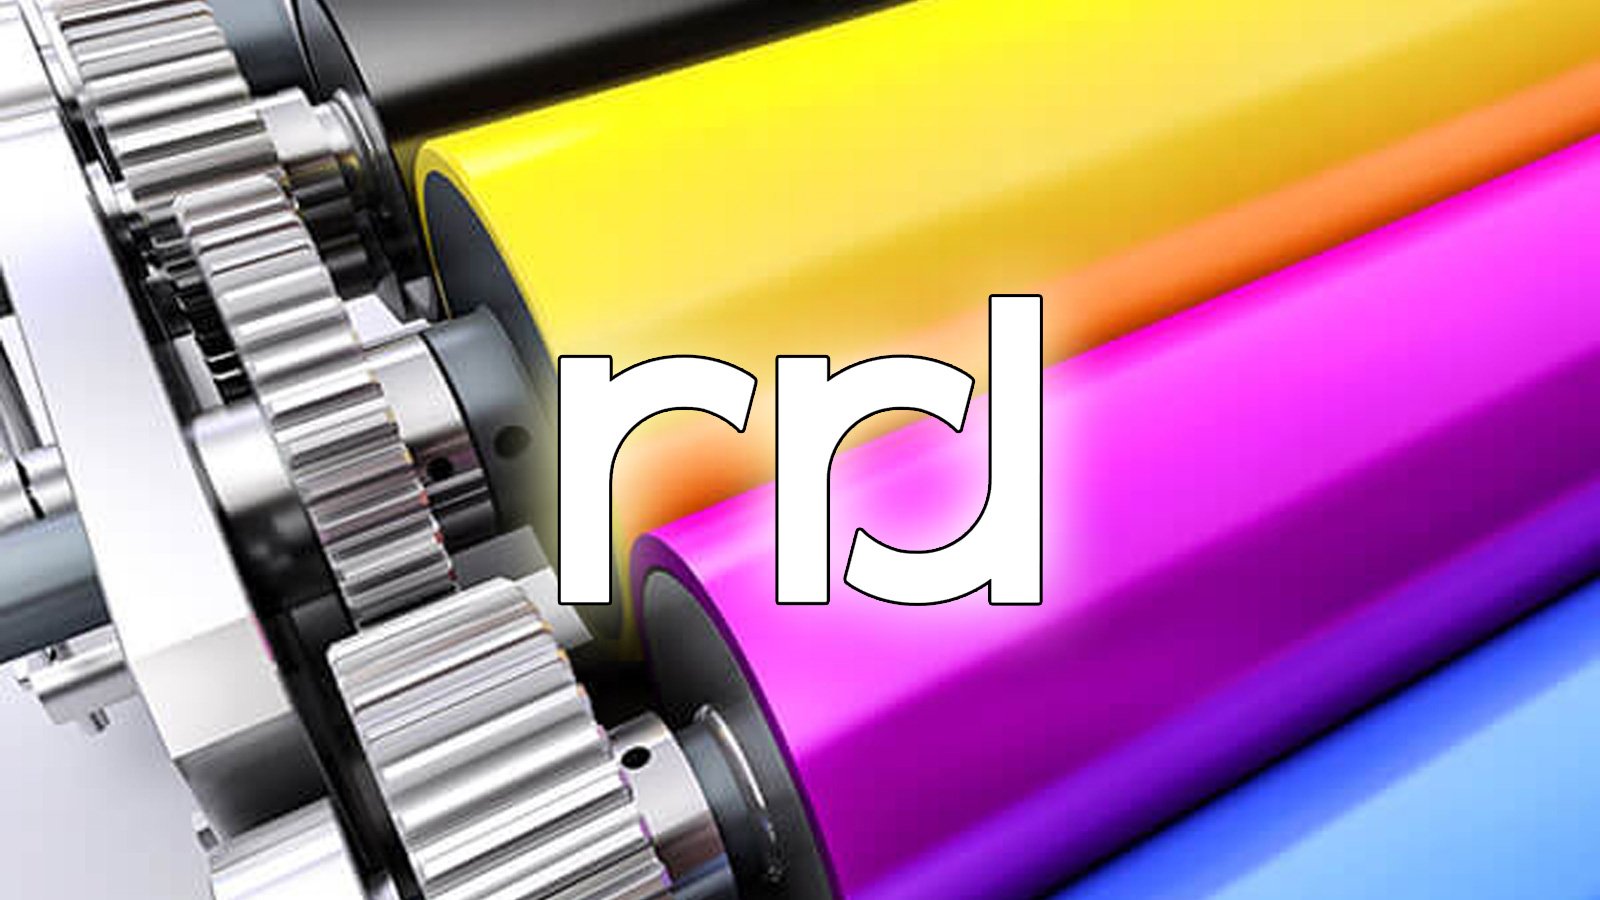 RRD logo overlaid on a color printing press